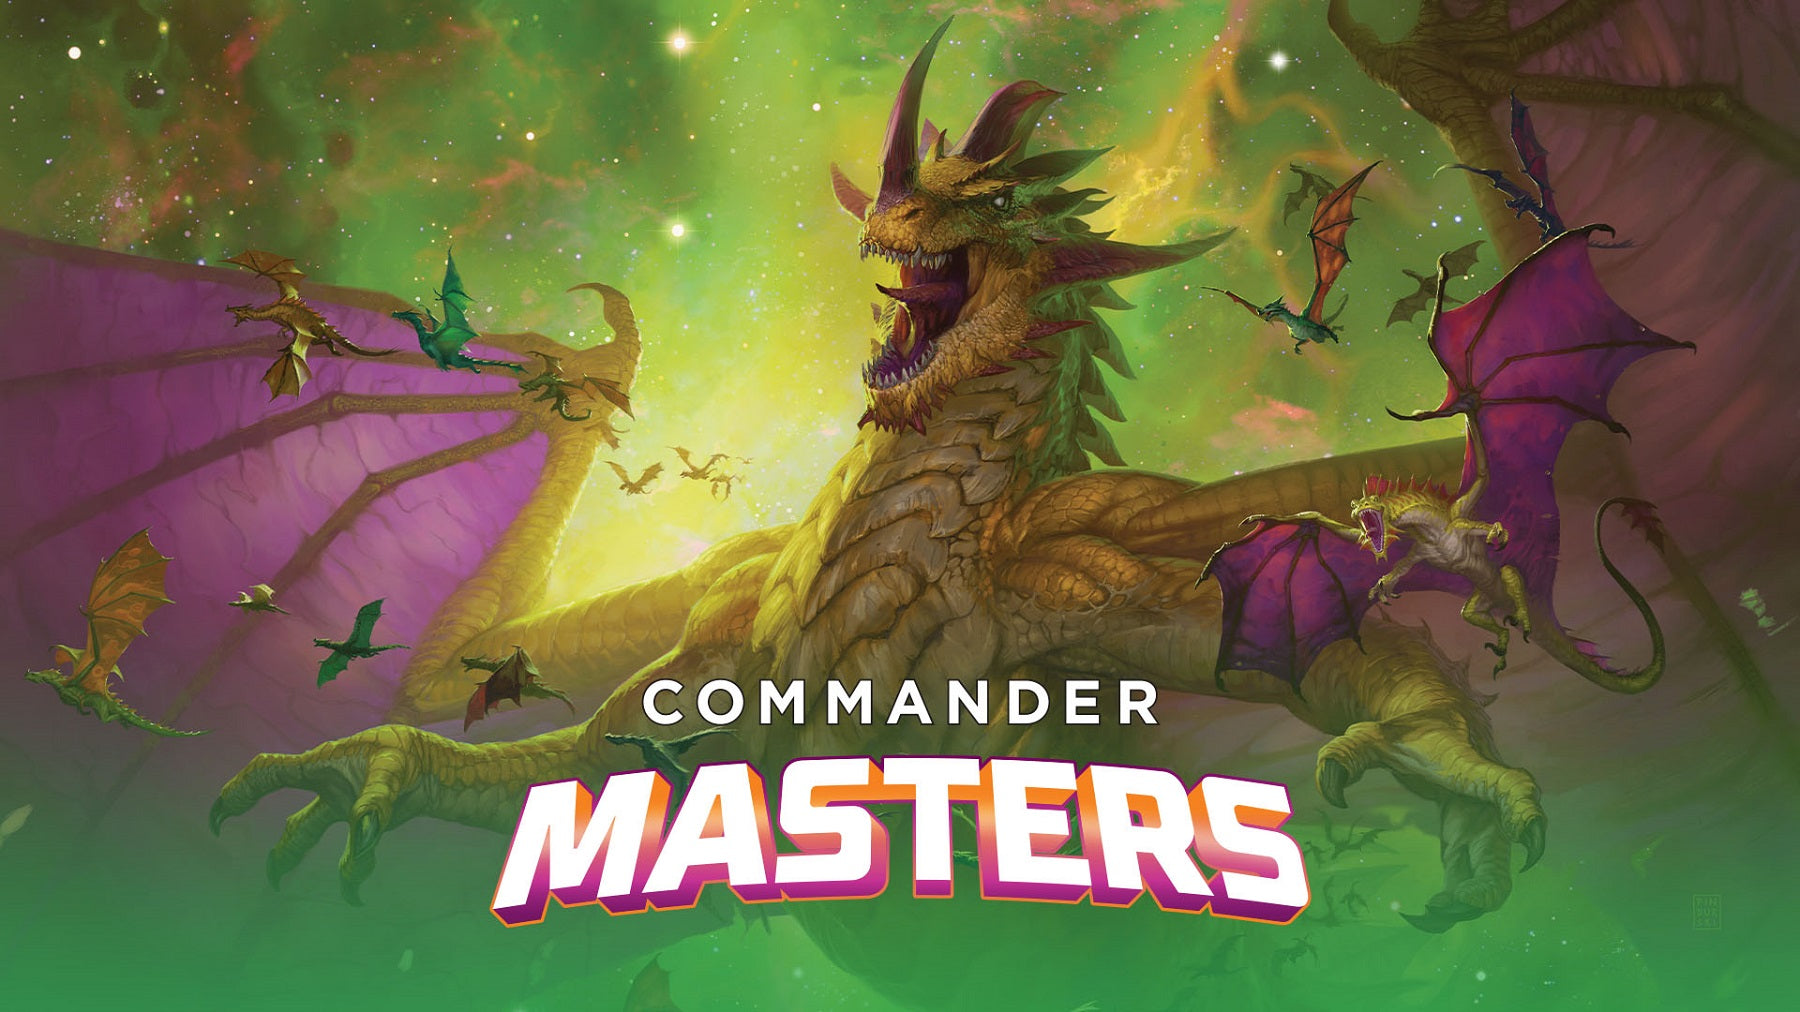 The Spiciest Art in Commander Masters